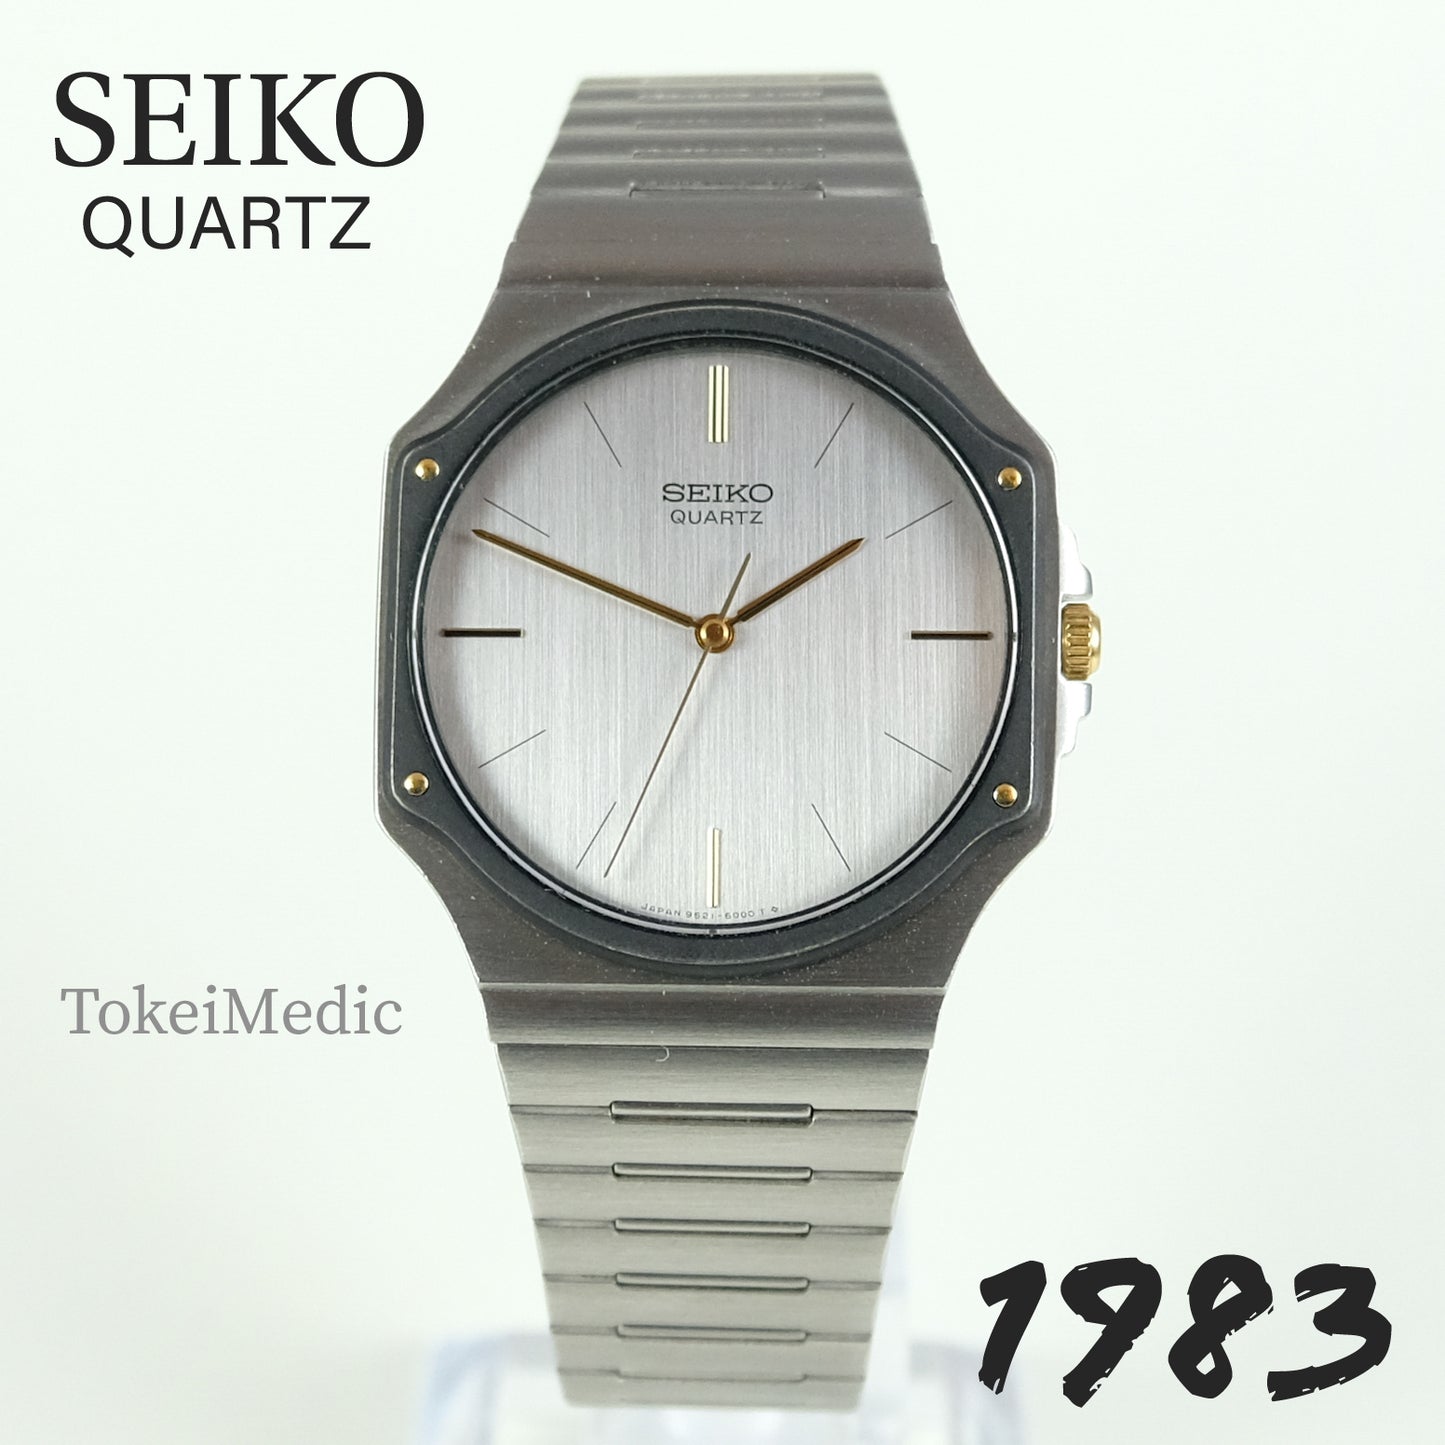 1983 Seiko Quartz 9521-6000